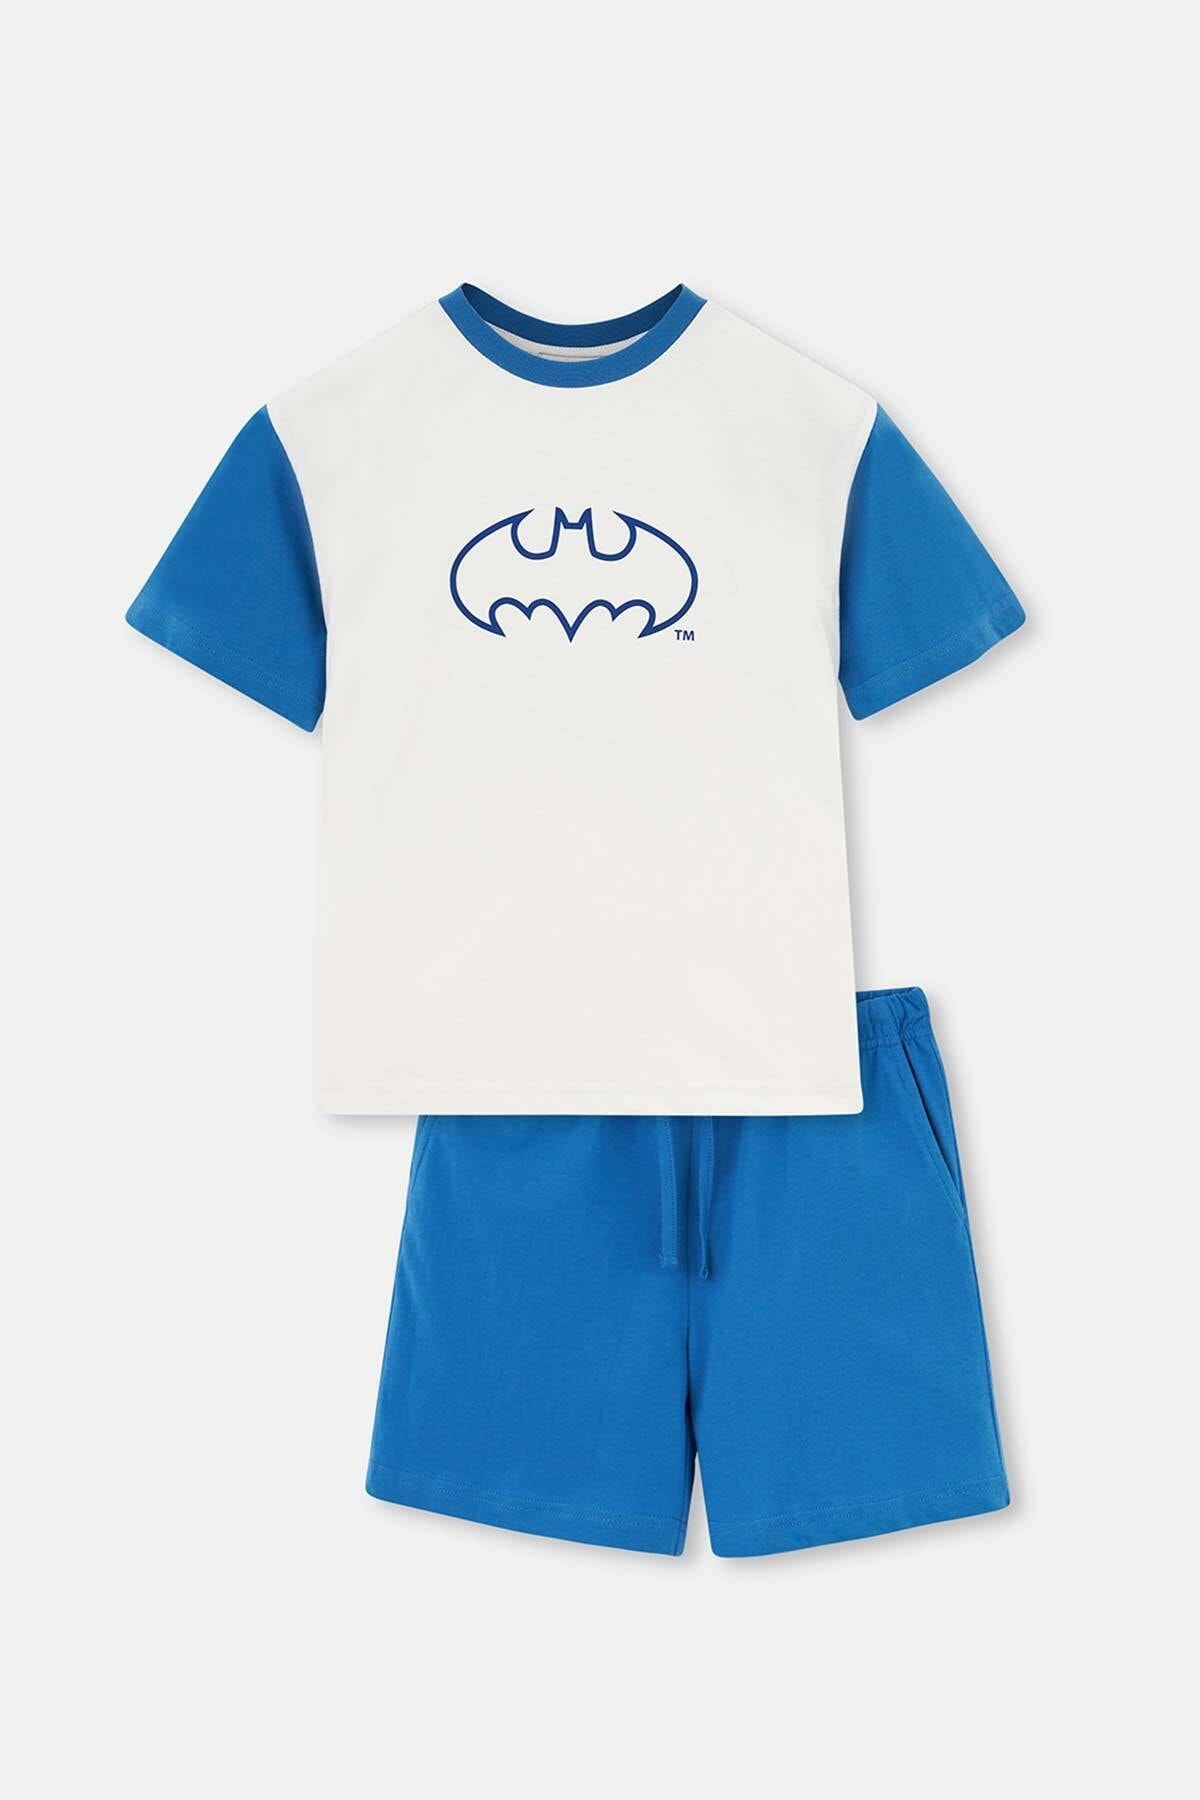 Dagi White Batman Printed Short Sleeved T-Shirt, Shorts And Pajamas Set